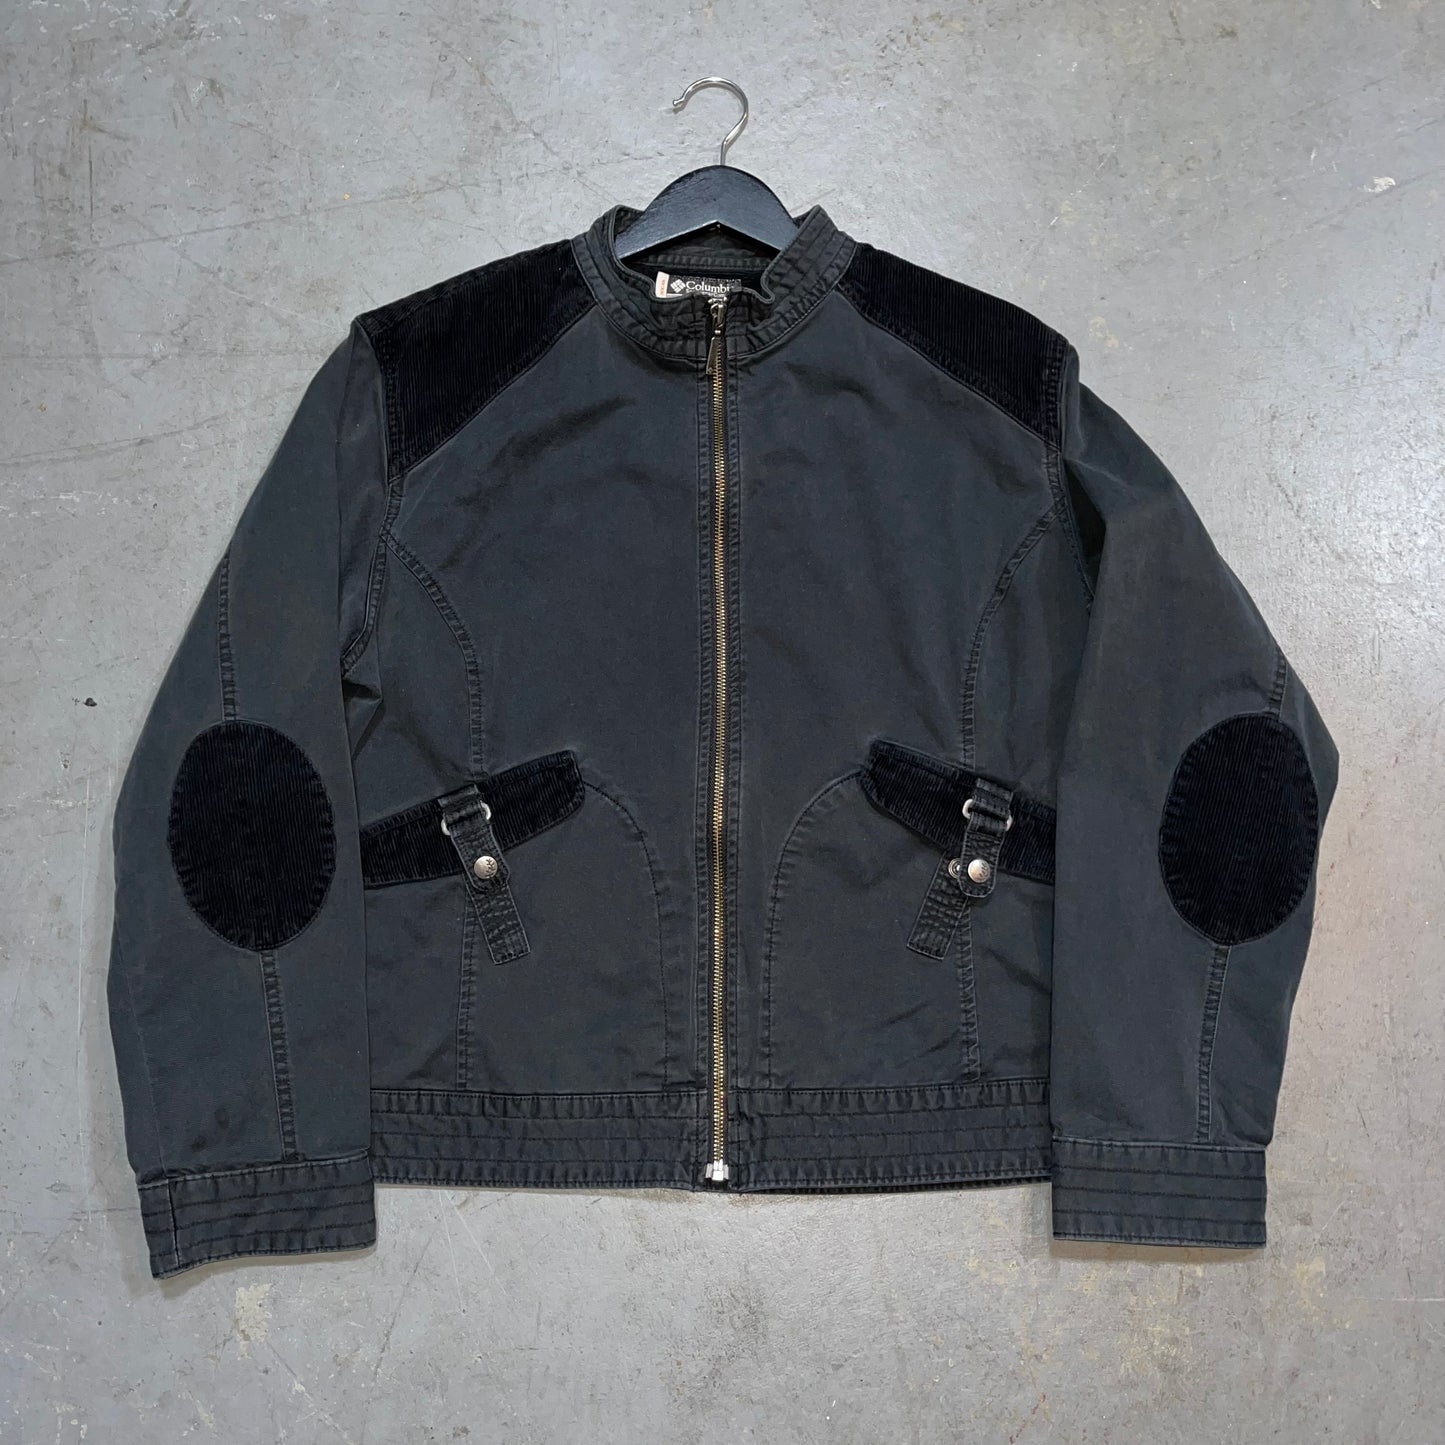 Columbia Sportswear X.C.O. Biker style jacket. Woman’s size XL